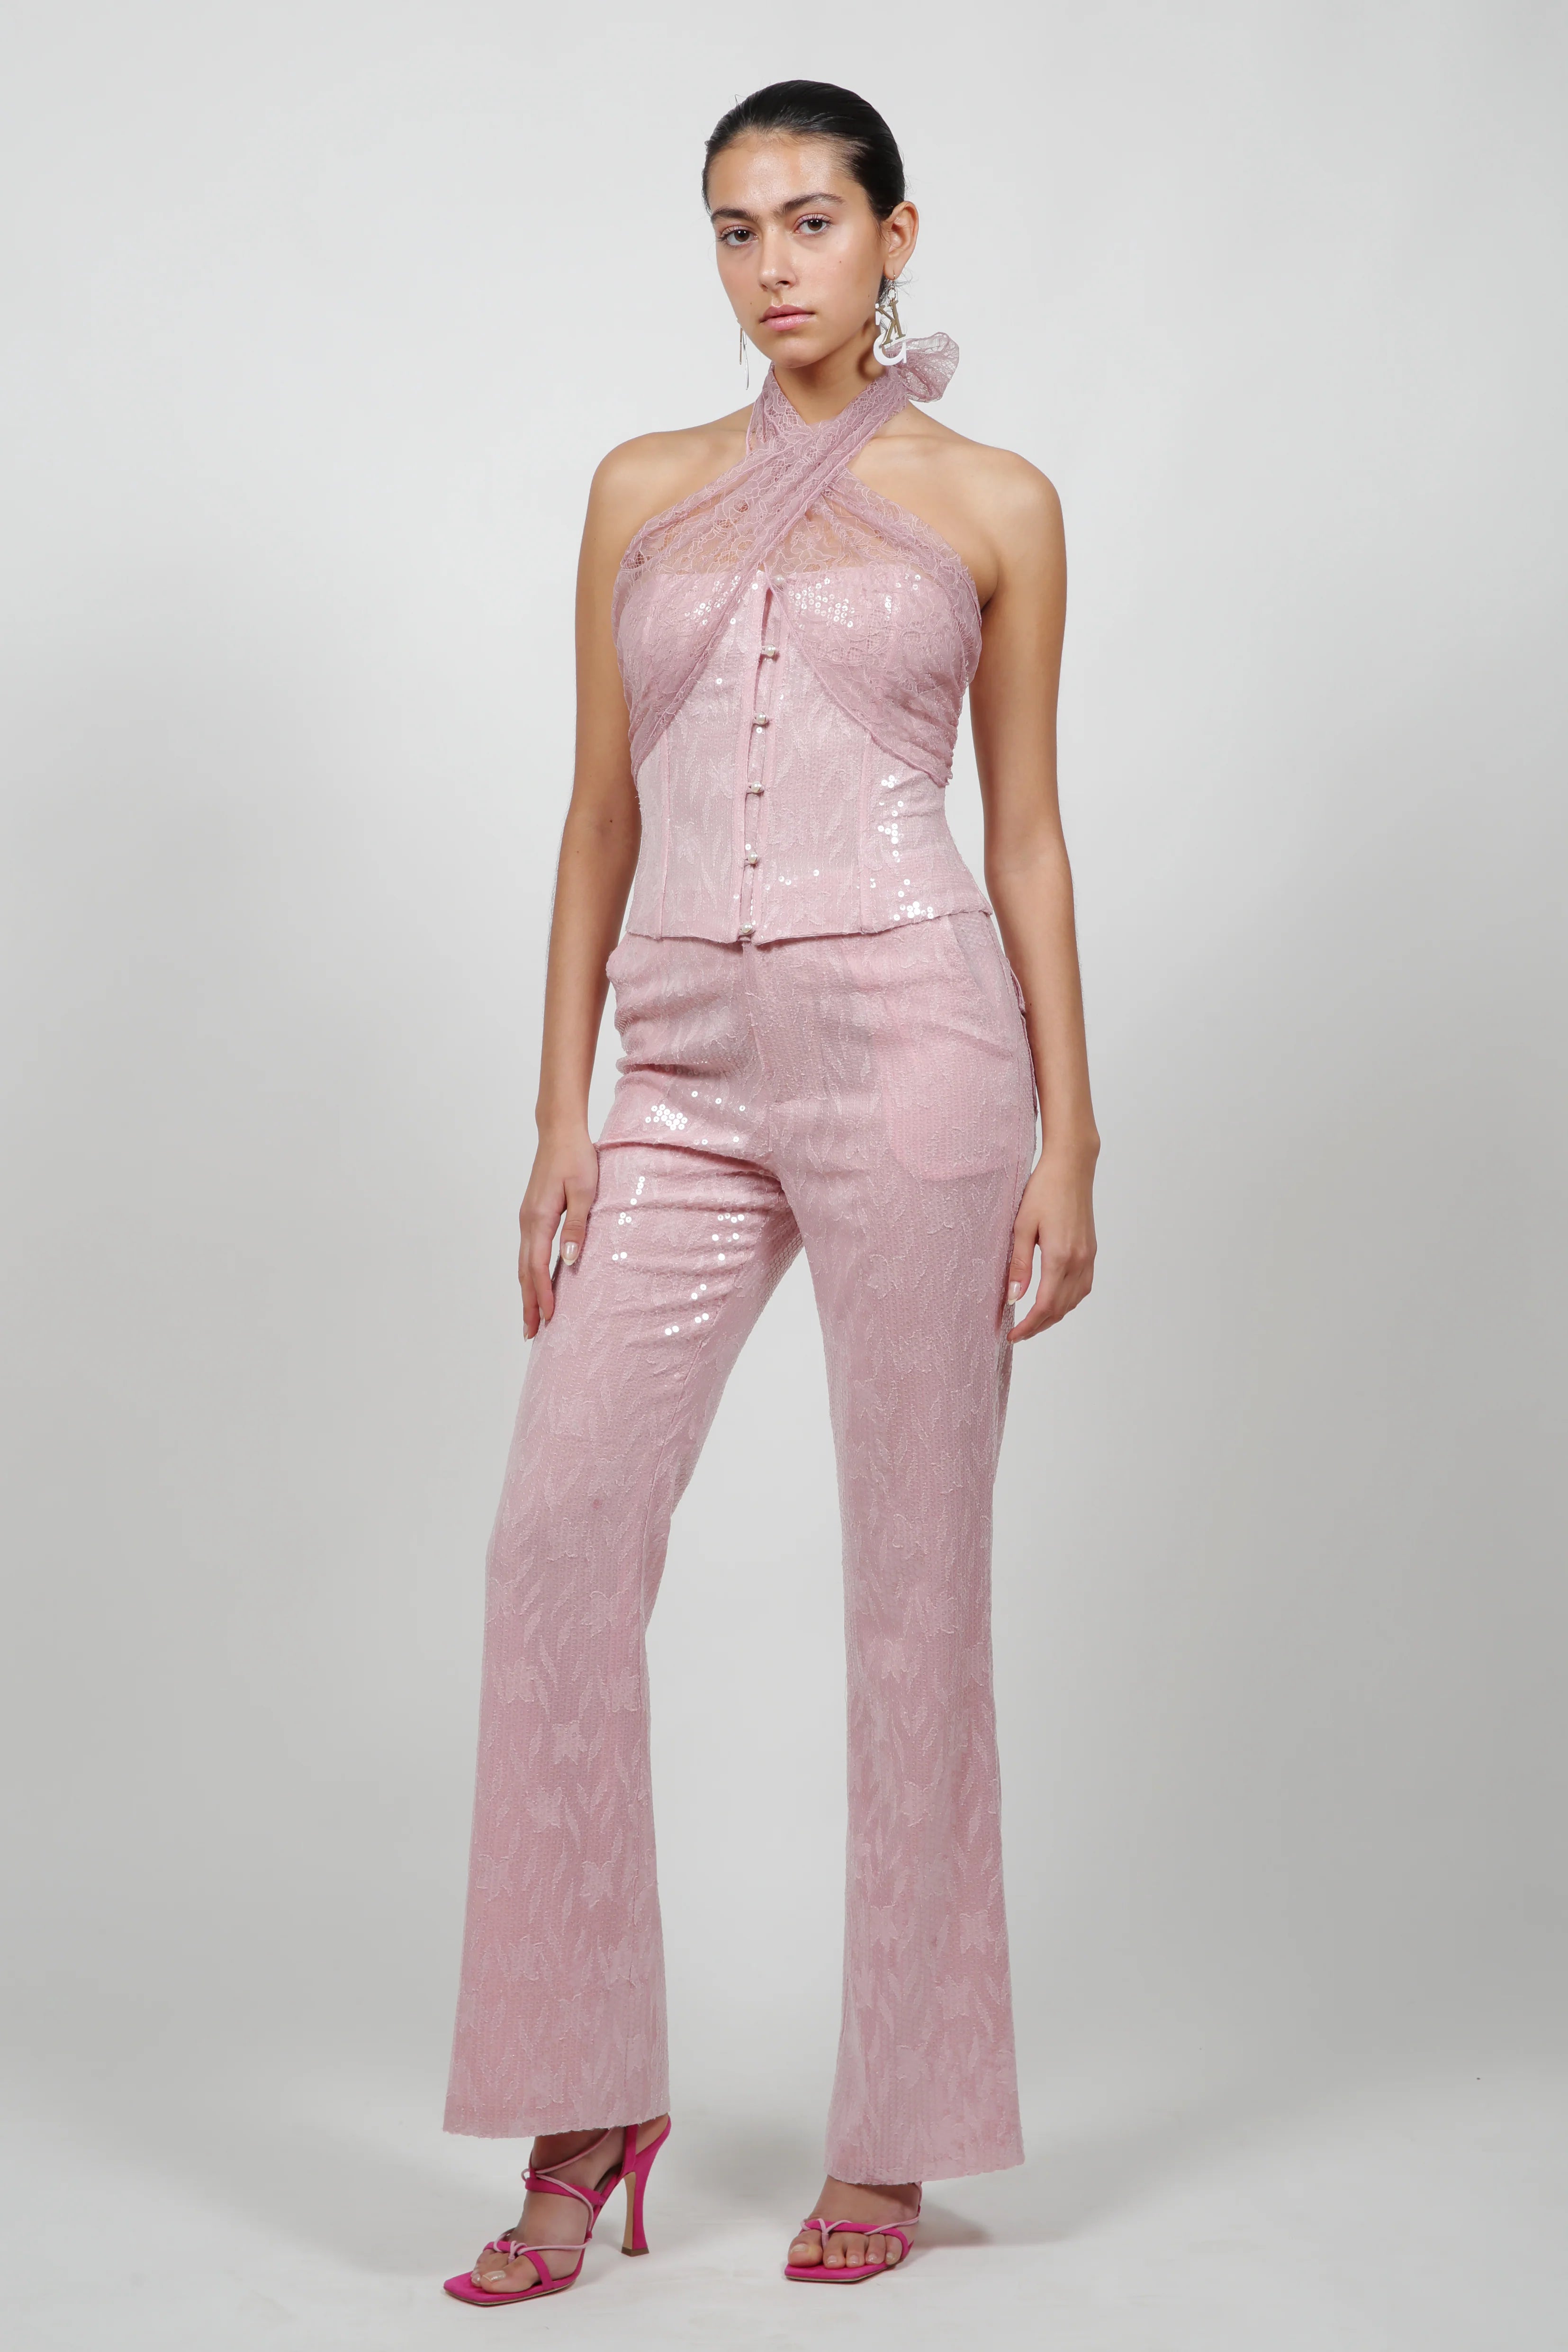 Zara, Tops, Zara Pink Lace Up Corset Top